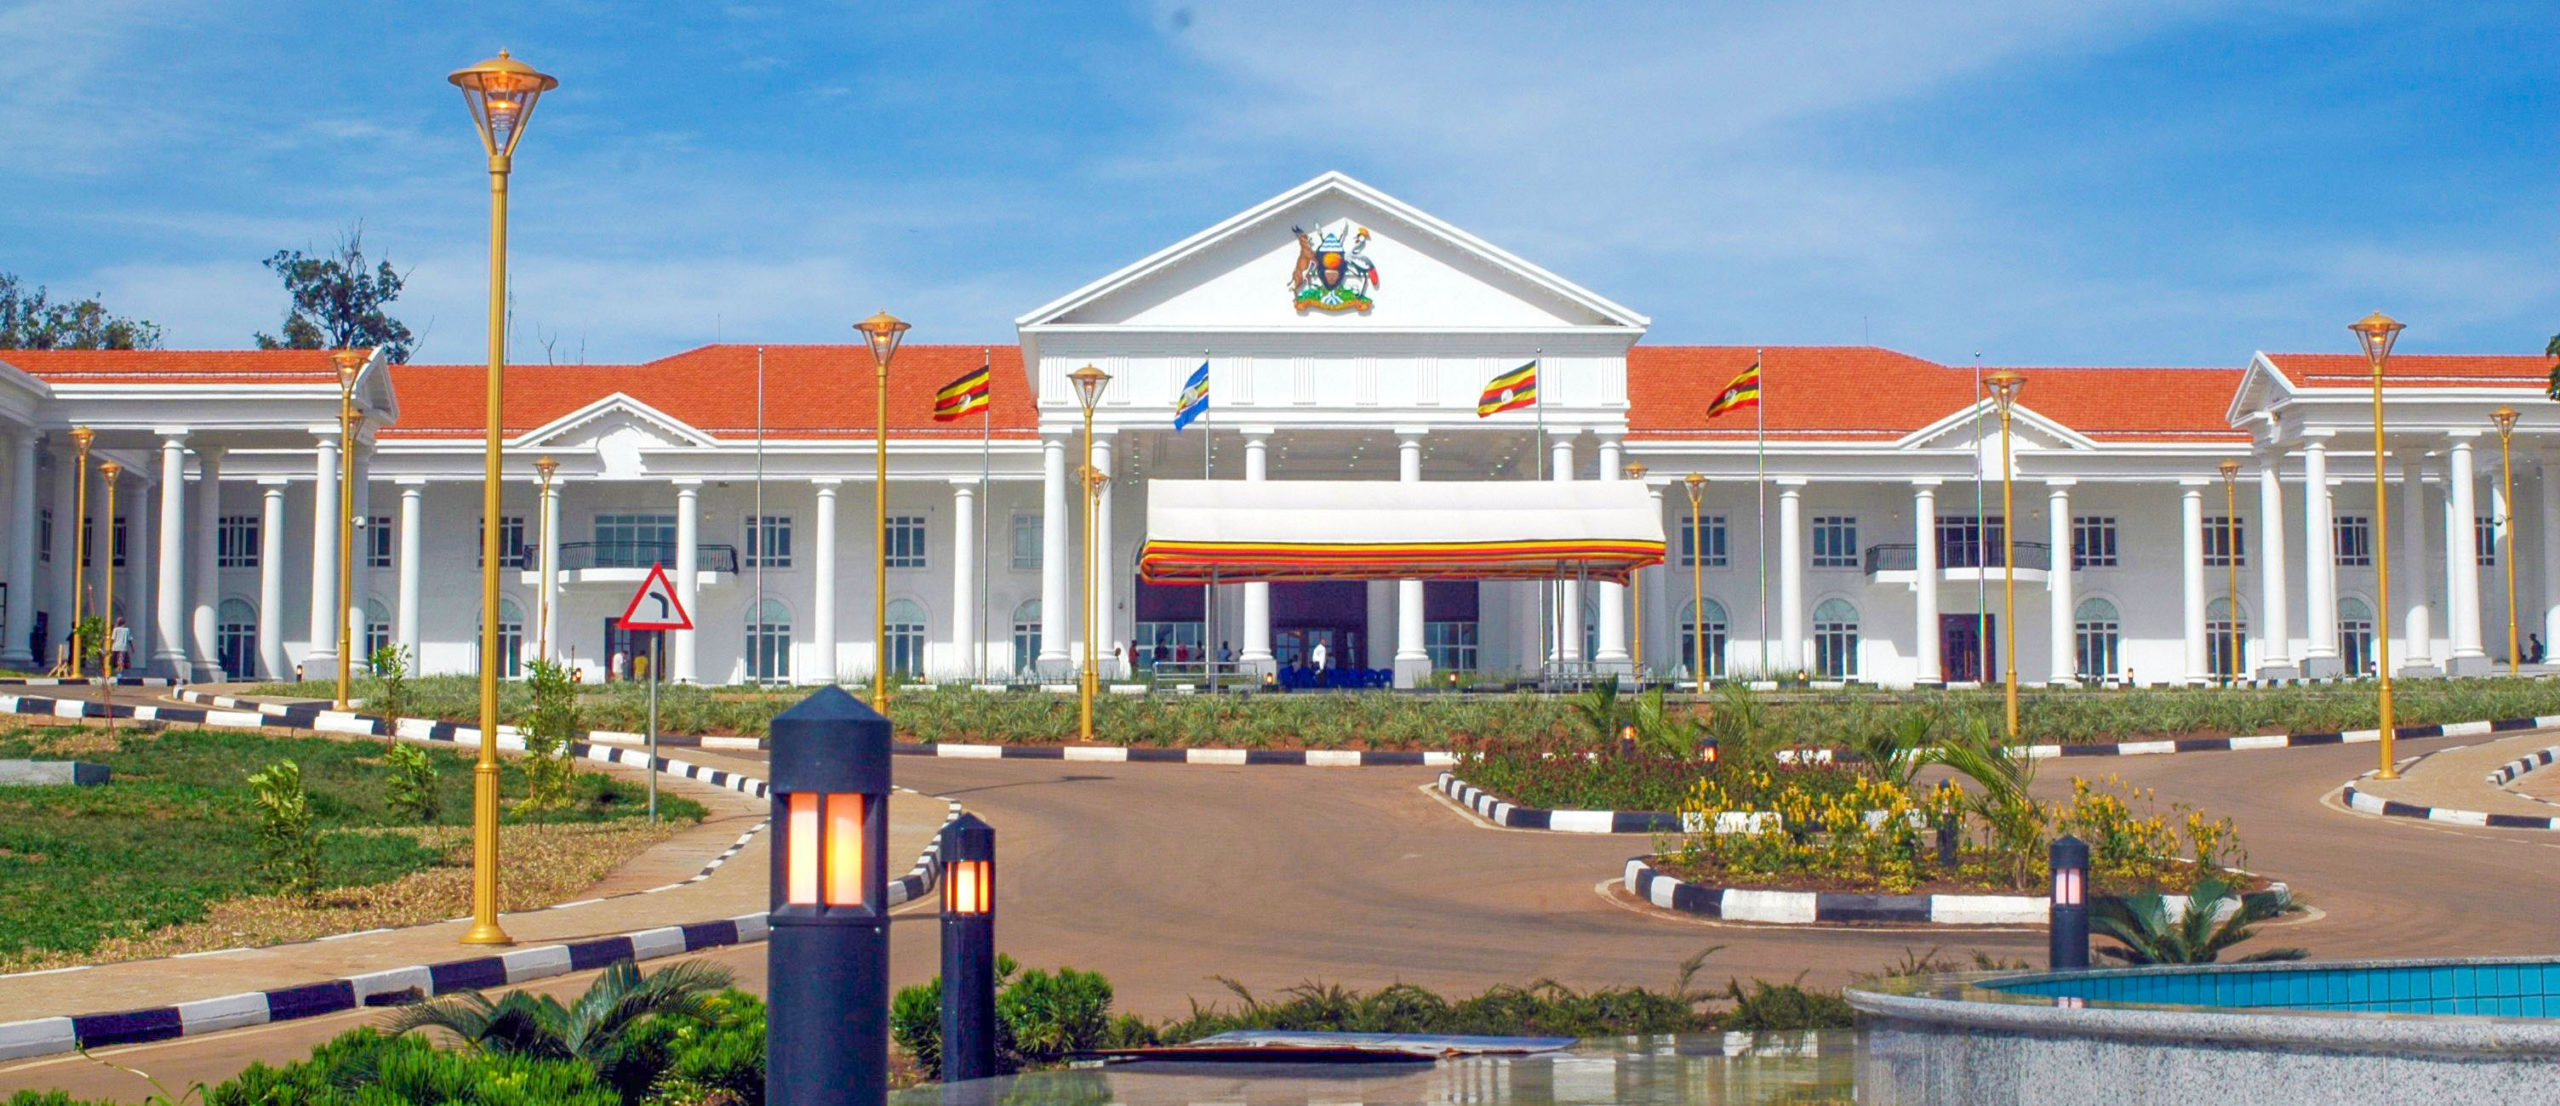 State House Entebbe